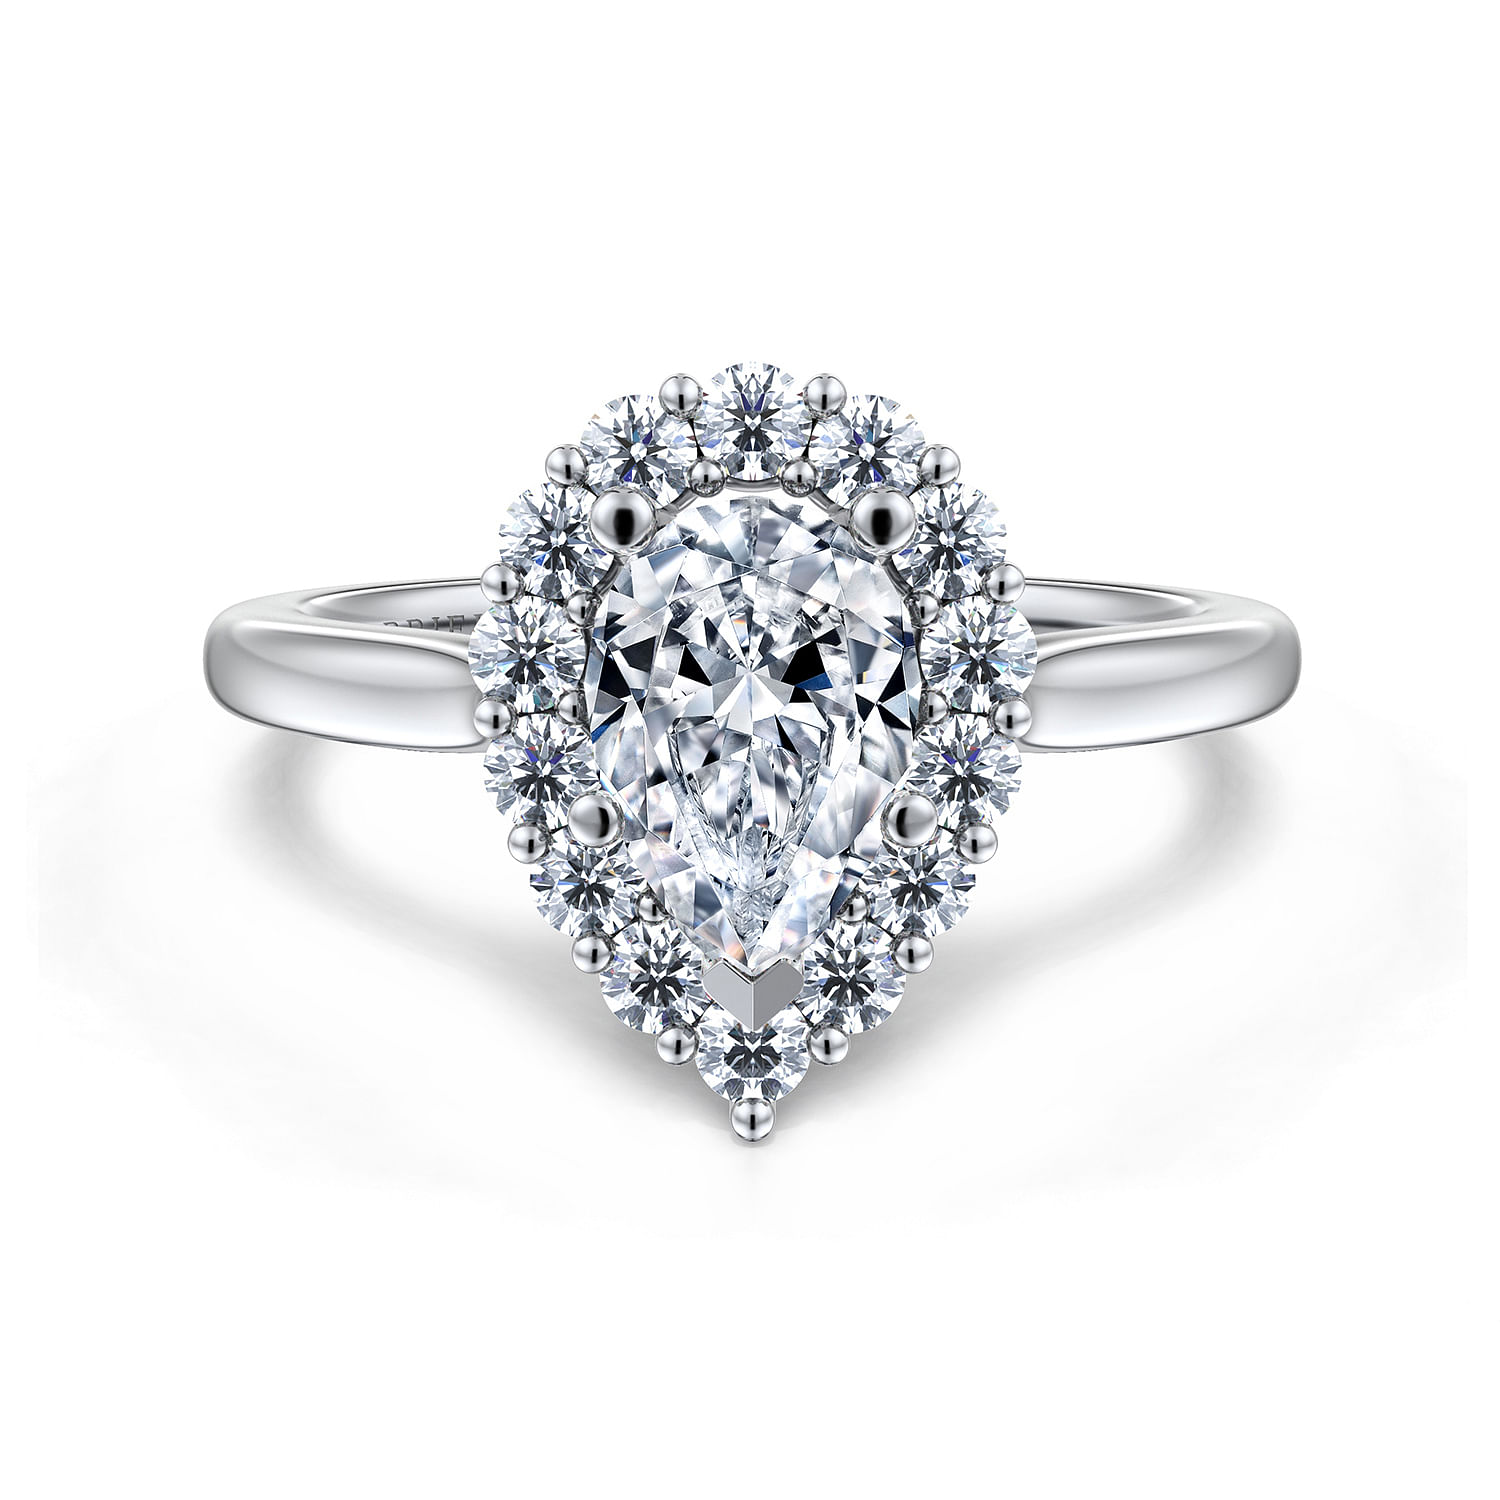 Althea - 14K White Gold Pear Shape Halo Diamond Engagement Ring